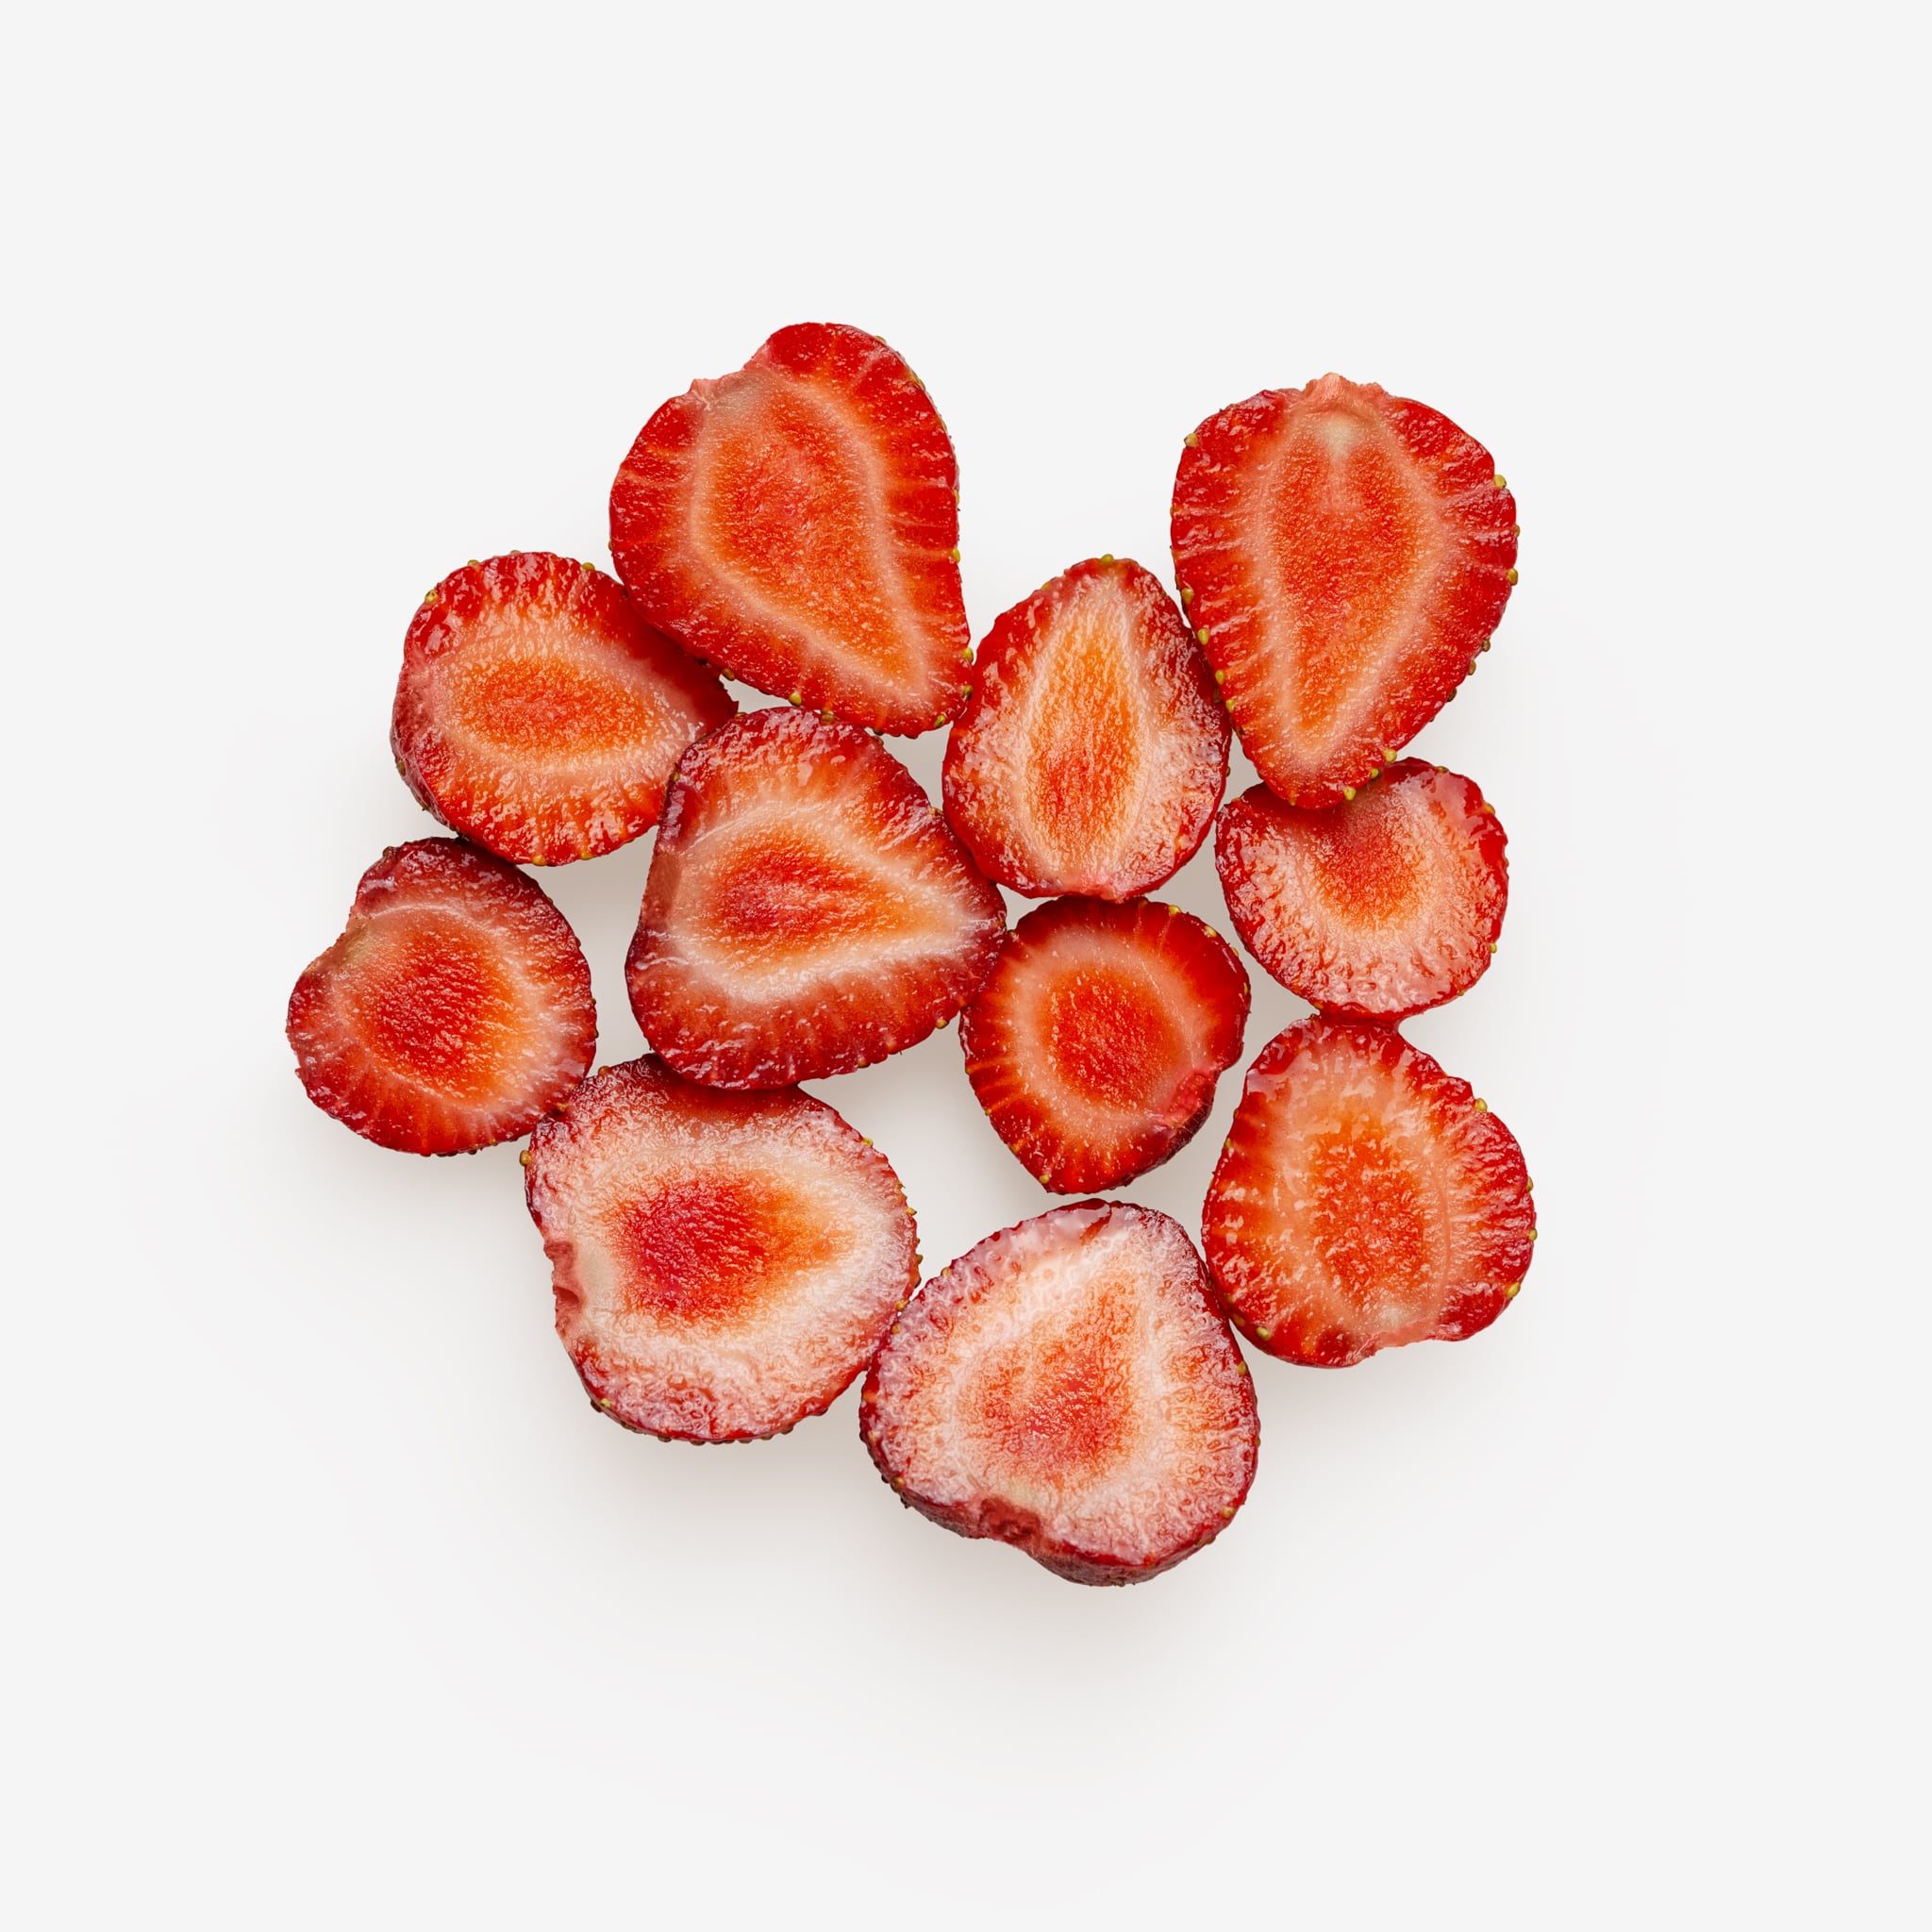 PSD Layered Strawberry image